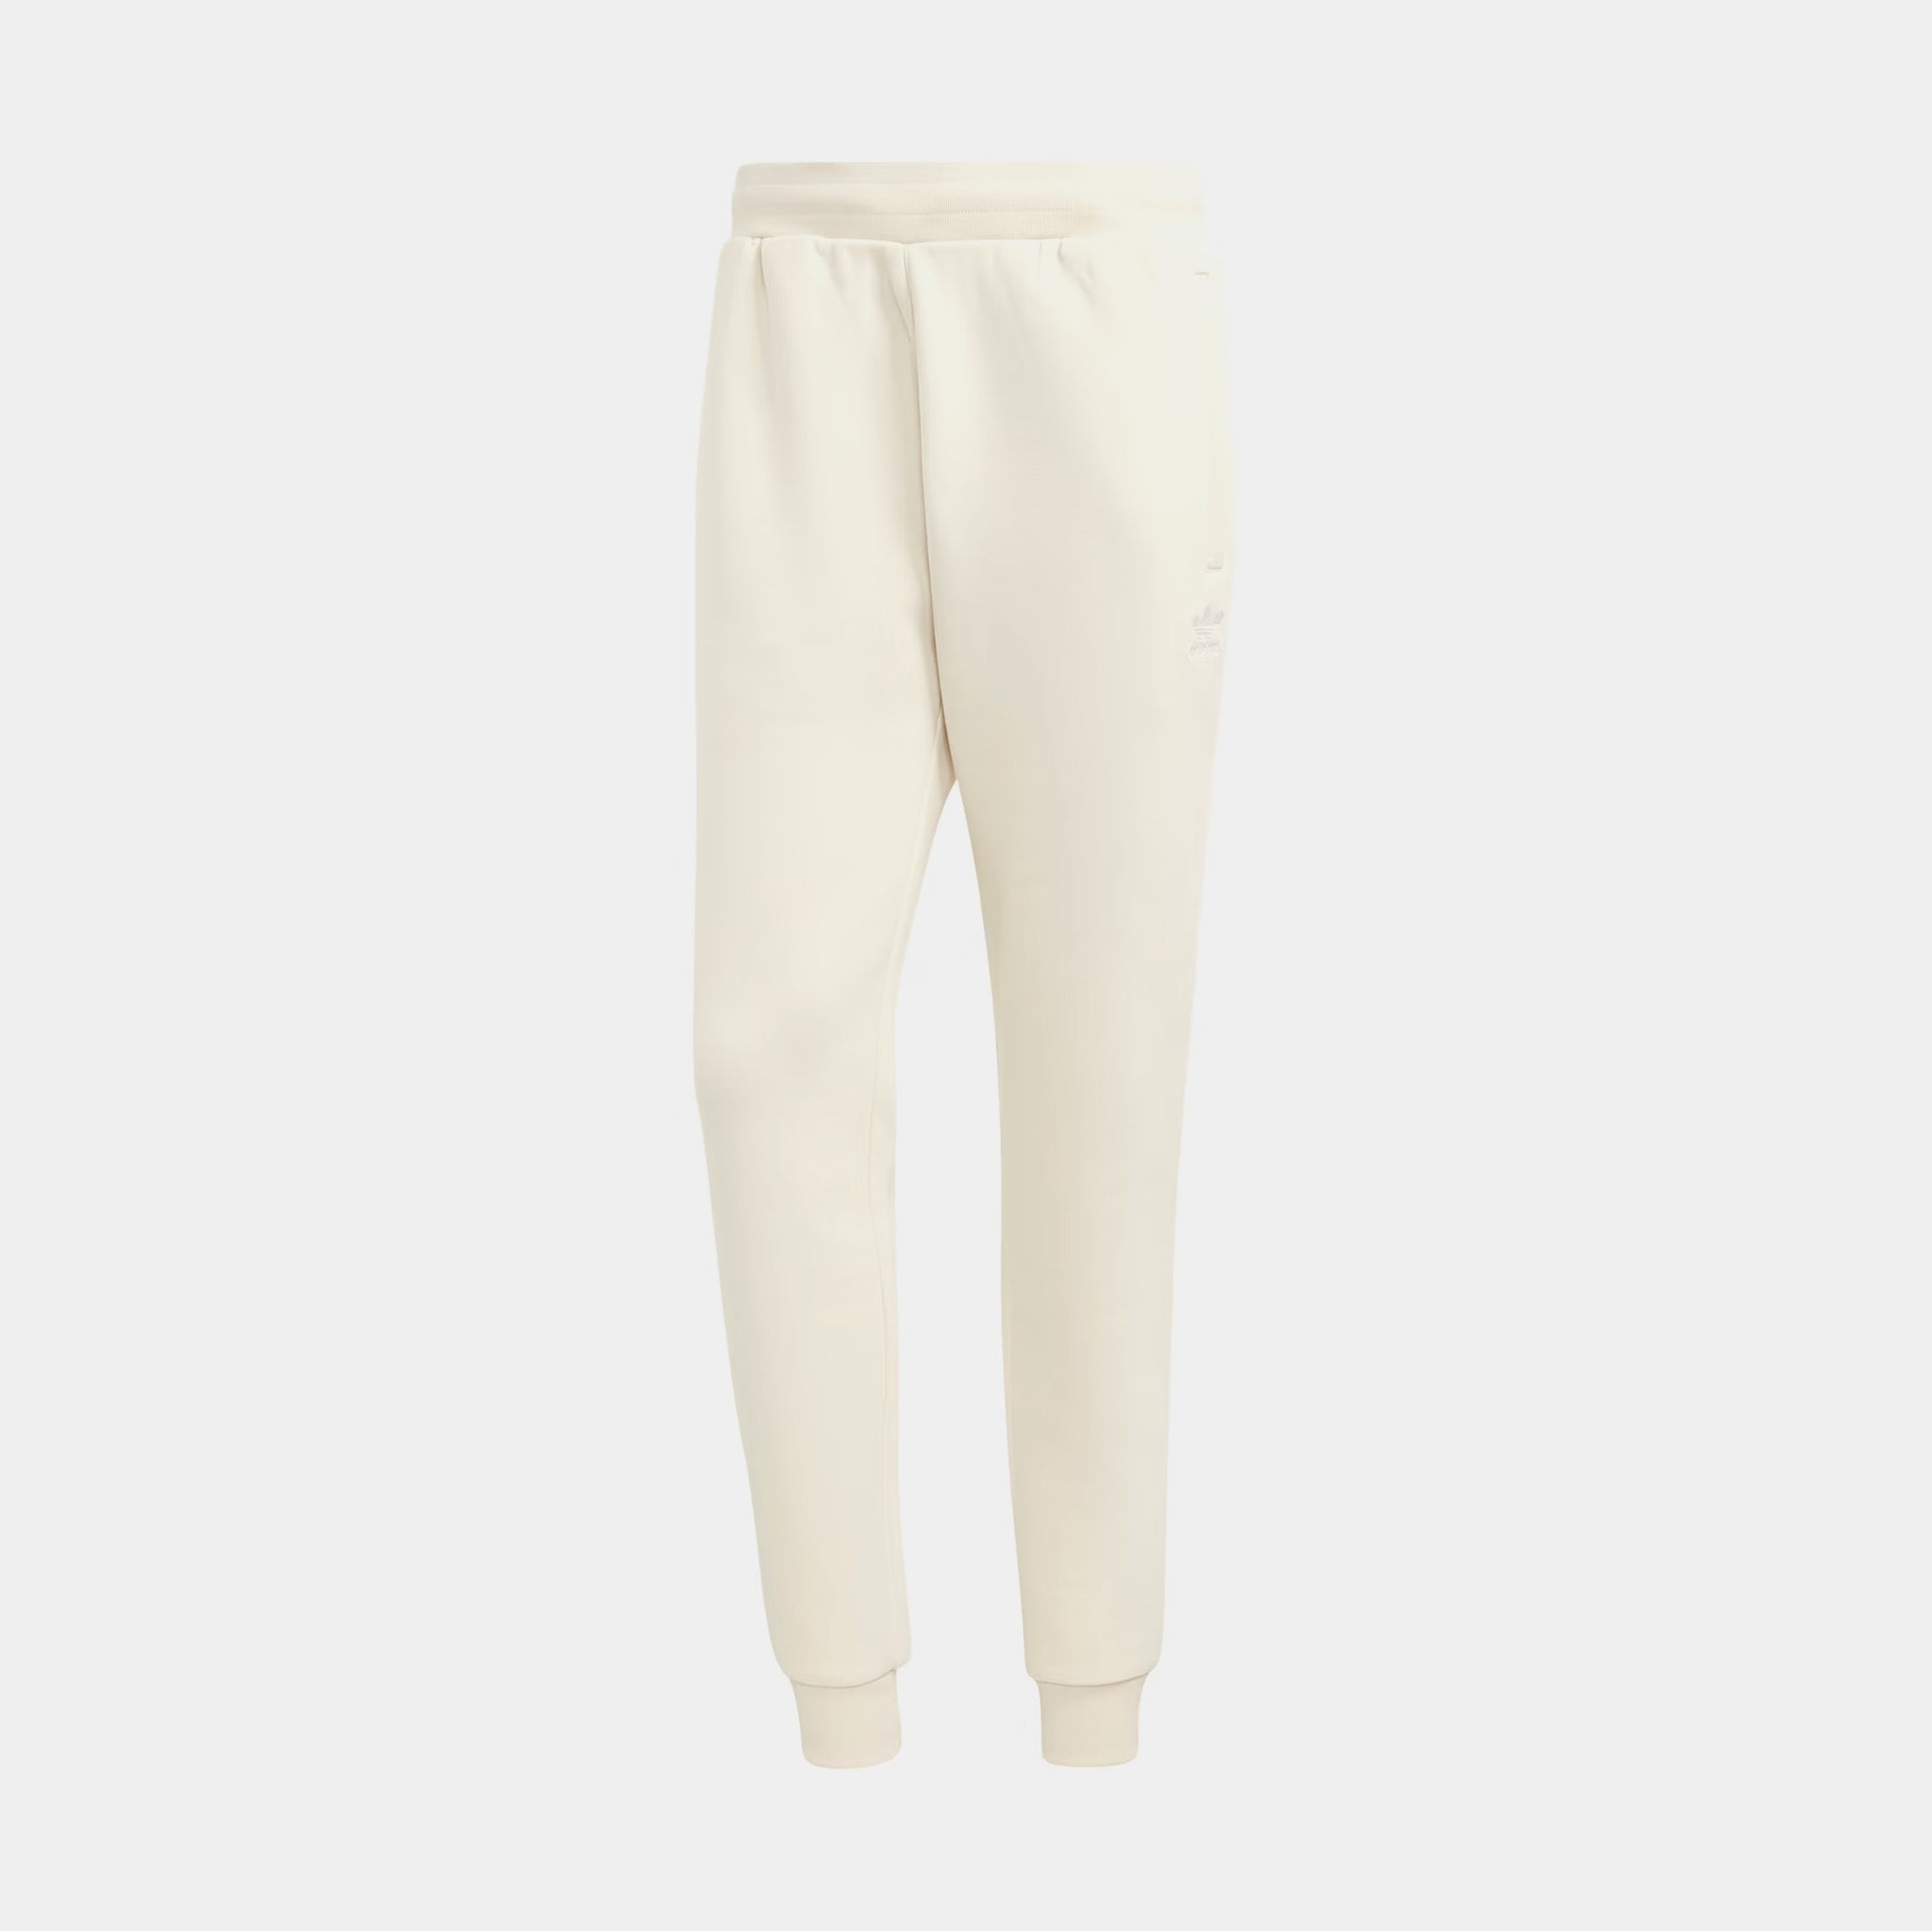 Trefoil Essentials Mens Pants (Wonder White)